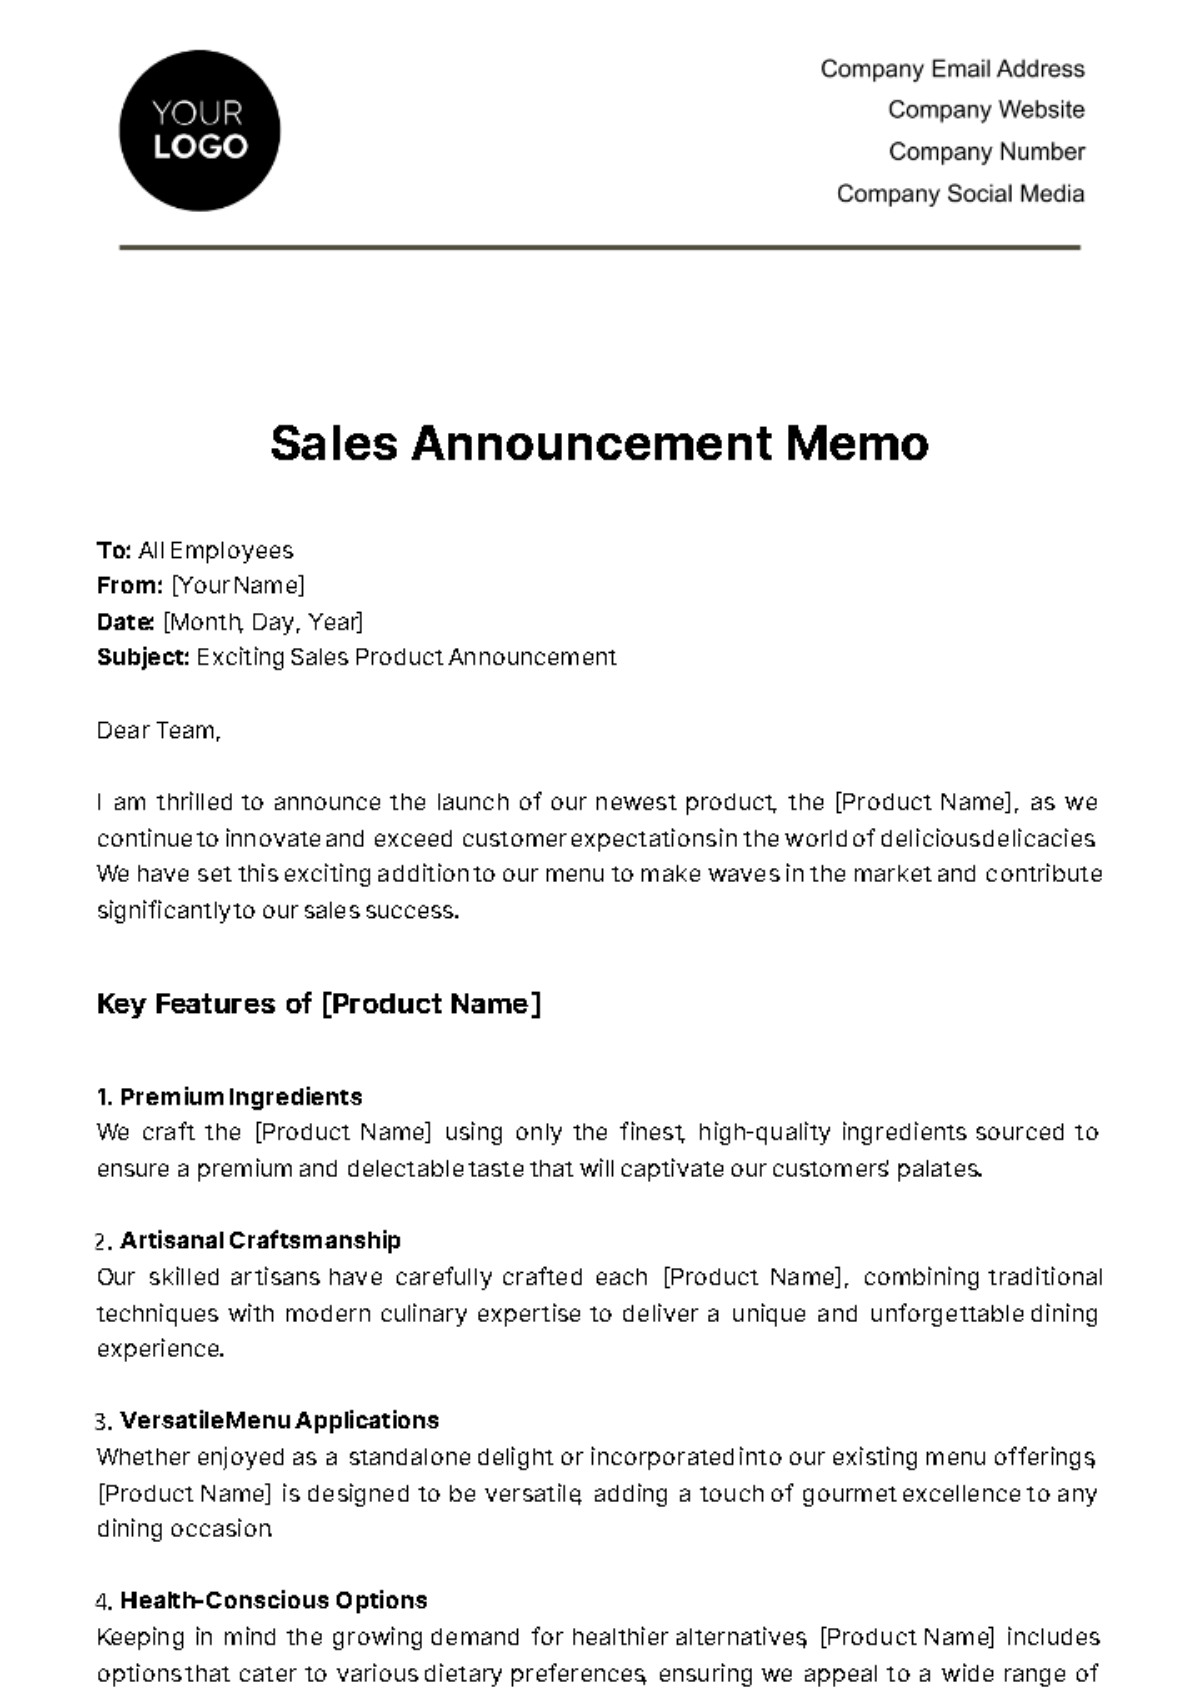 Free Sales Announcement Memo Template